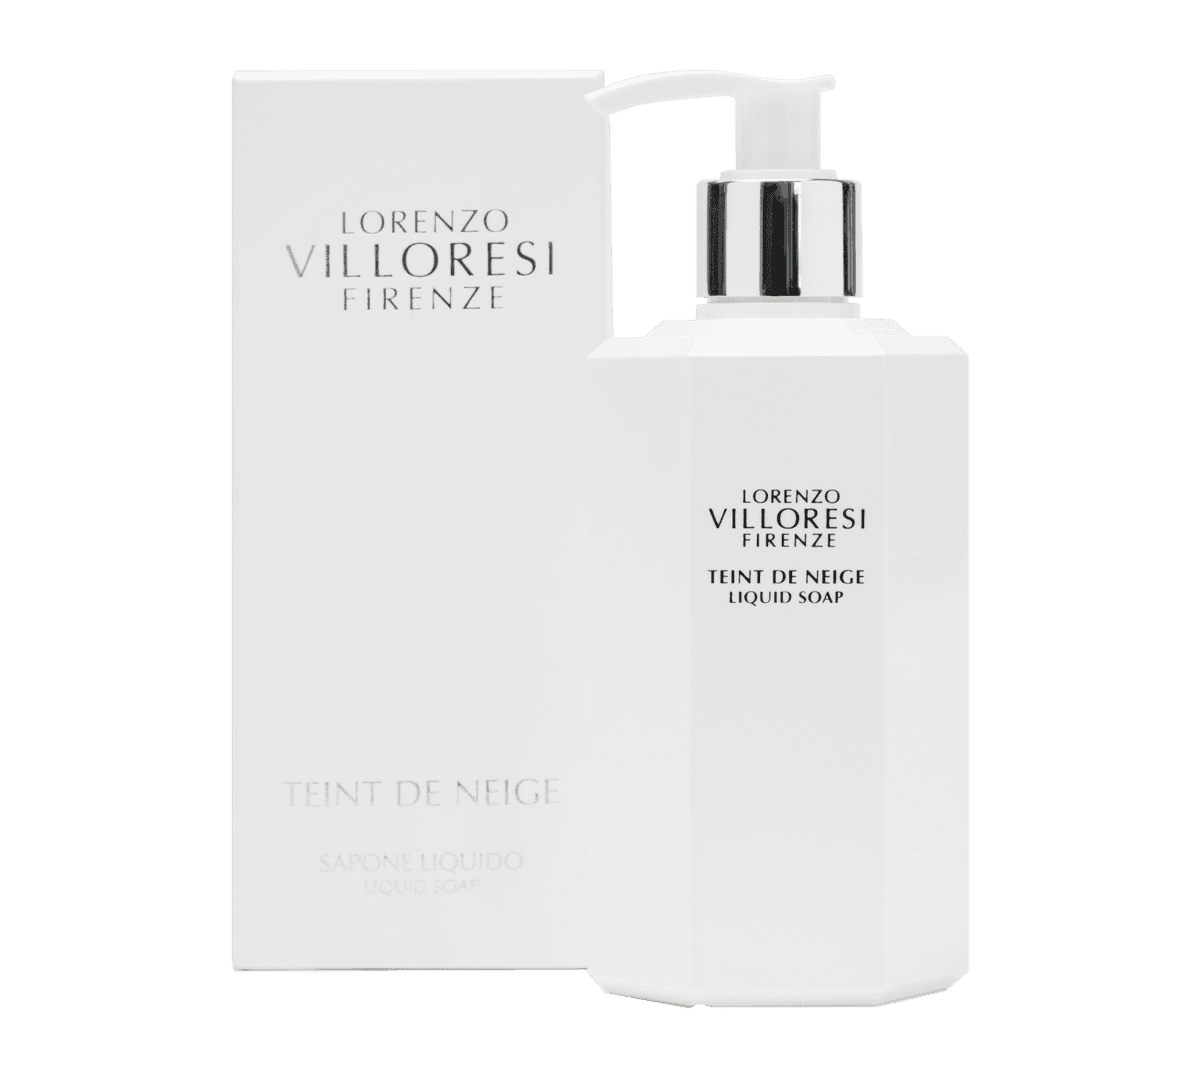 Lorenzo Villoresi - Teint de neige liquid soap with dispenser and box | Perfume Lounge